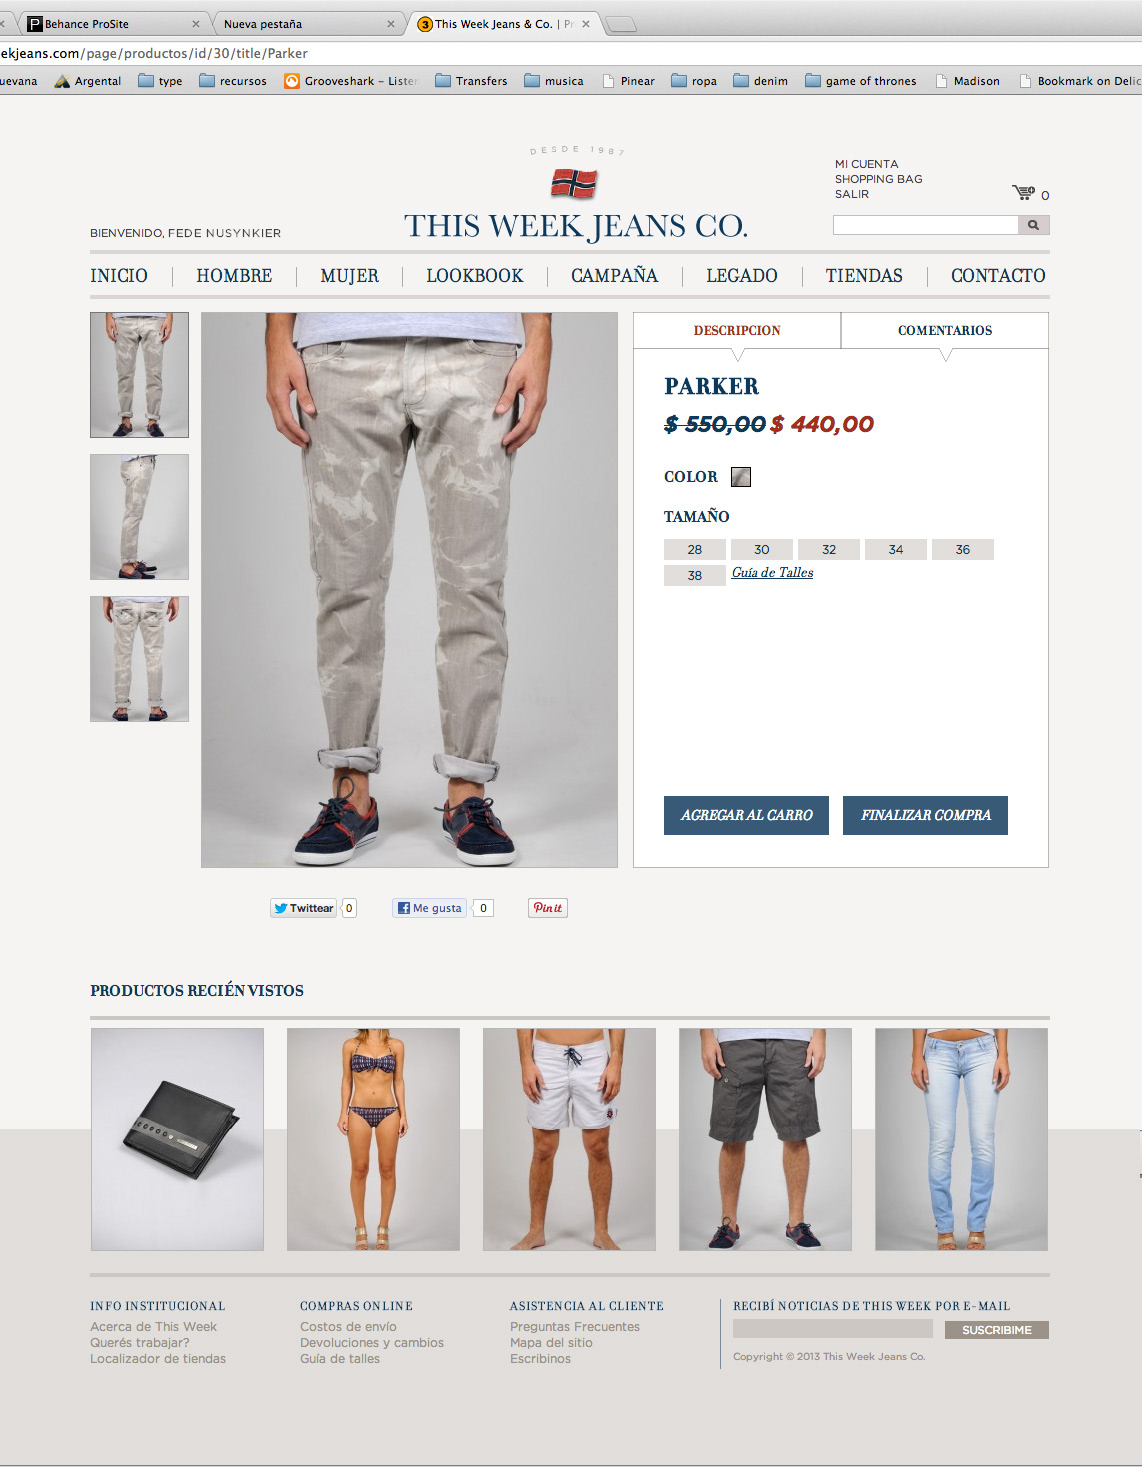 Thisweek jeans Denim moda rosario argentina nusynkier colombo Alias